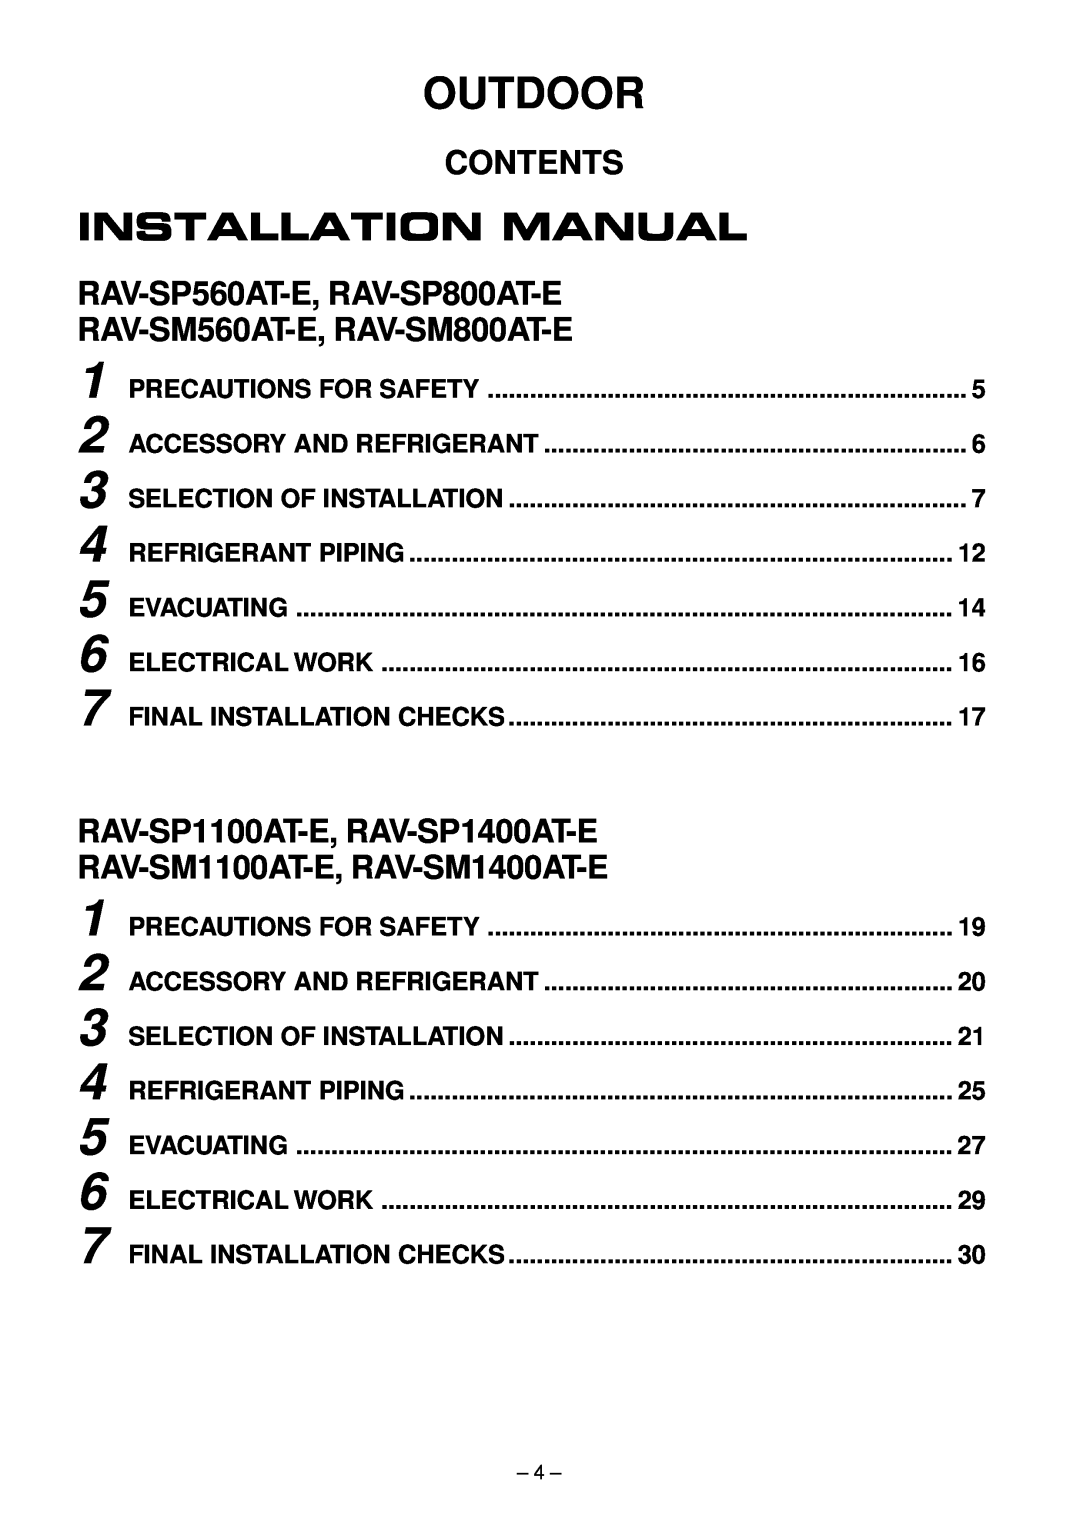 Balcar R410A service manual Outdoor, Installation Manual 